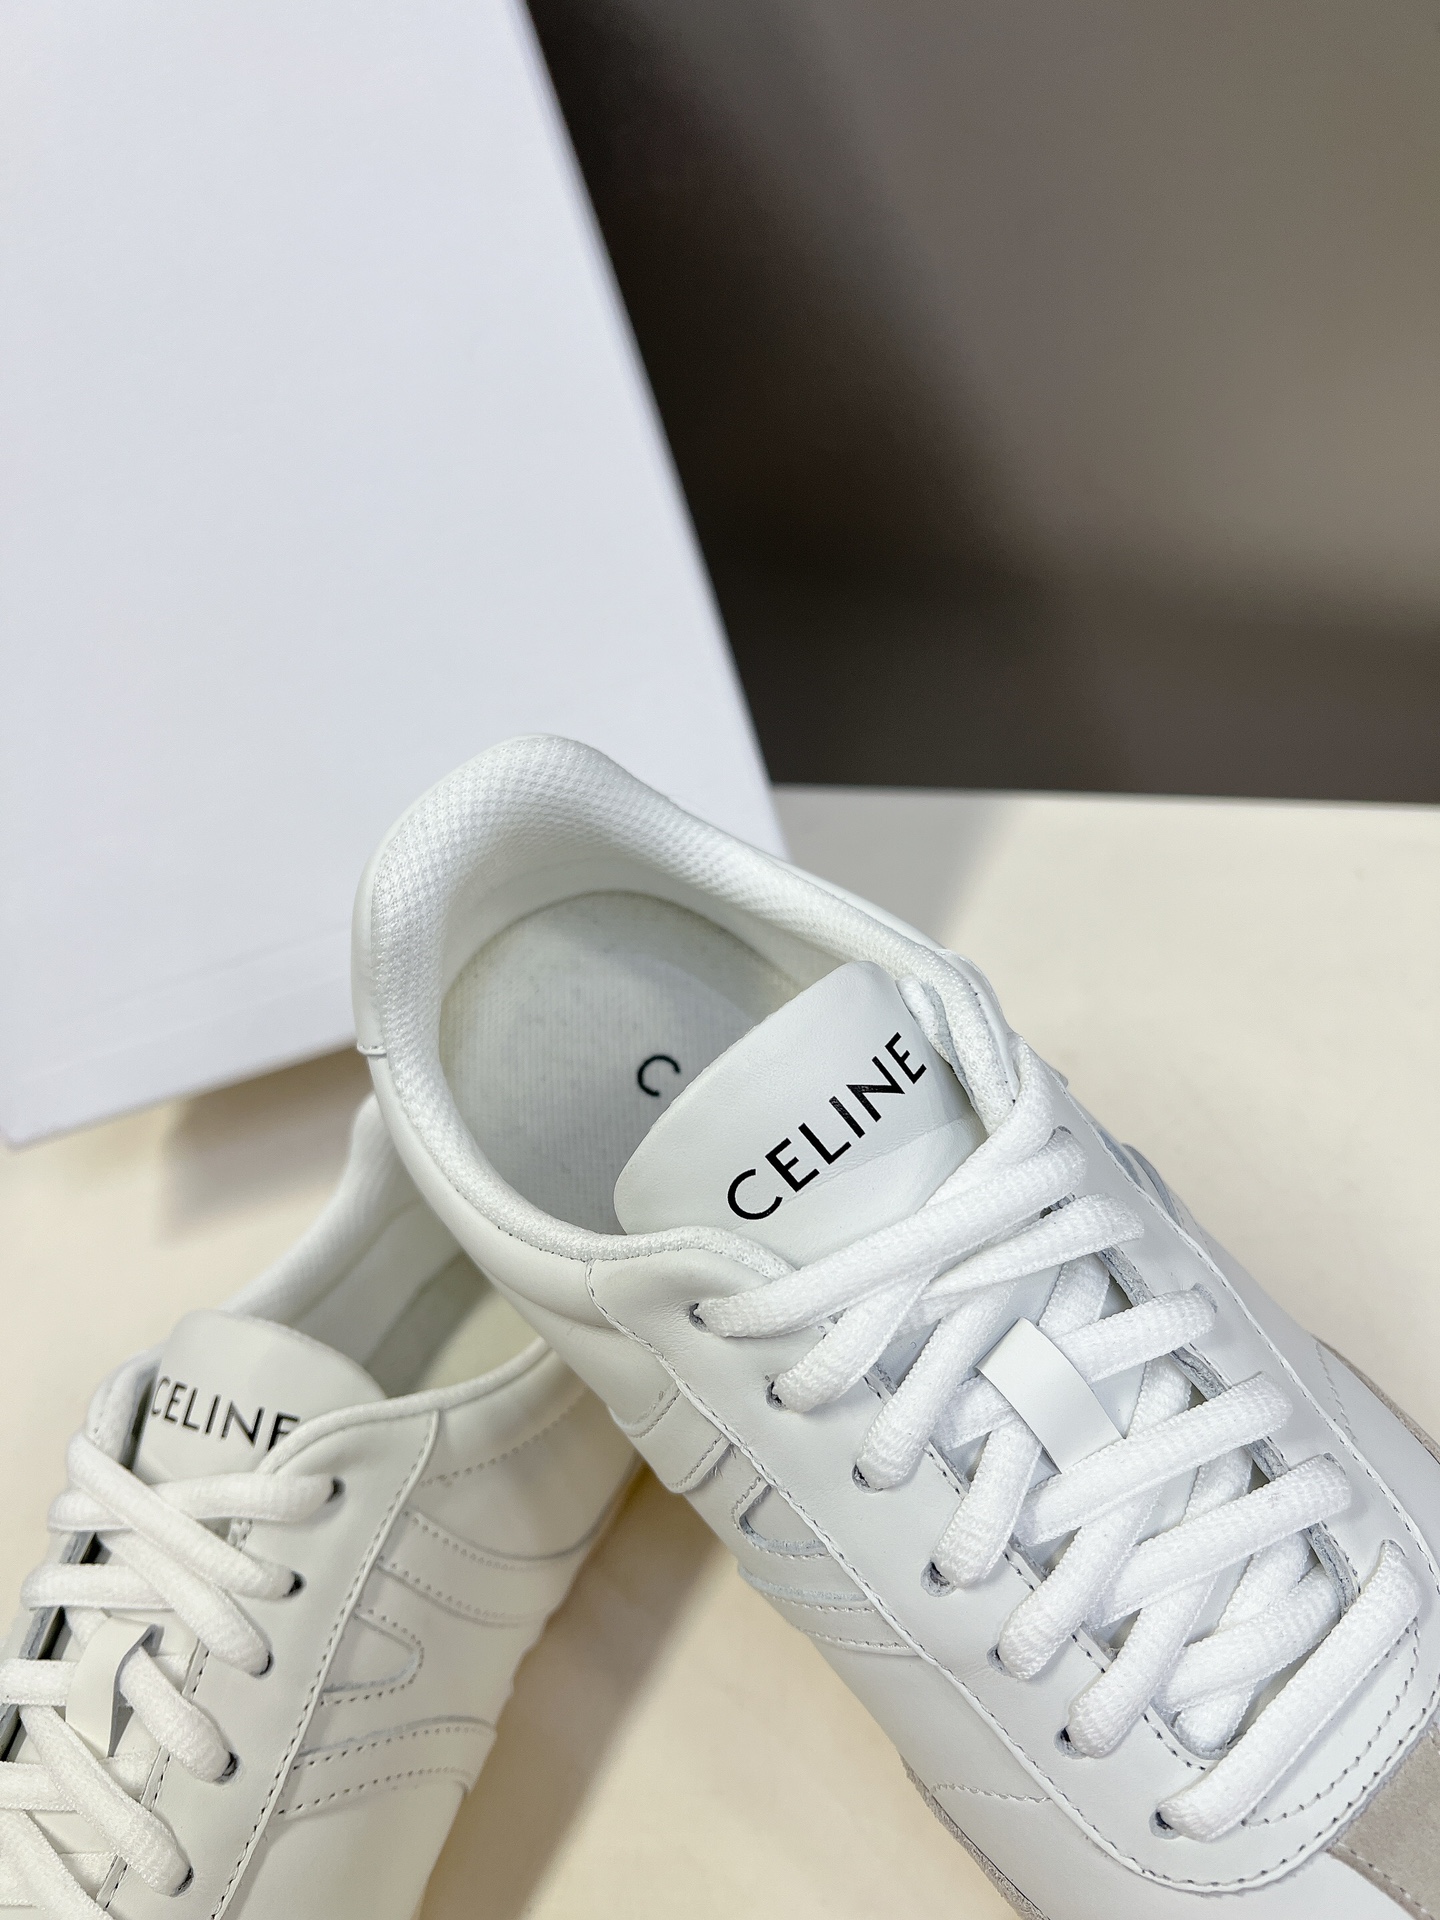 Celine思琳新款休闲鞋德训运动鞋小白鞋专柜7000RMB购入开发充满街头感的一双鞋子最新大C设计非常